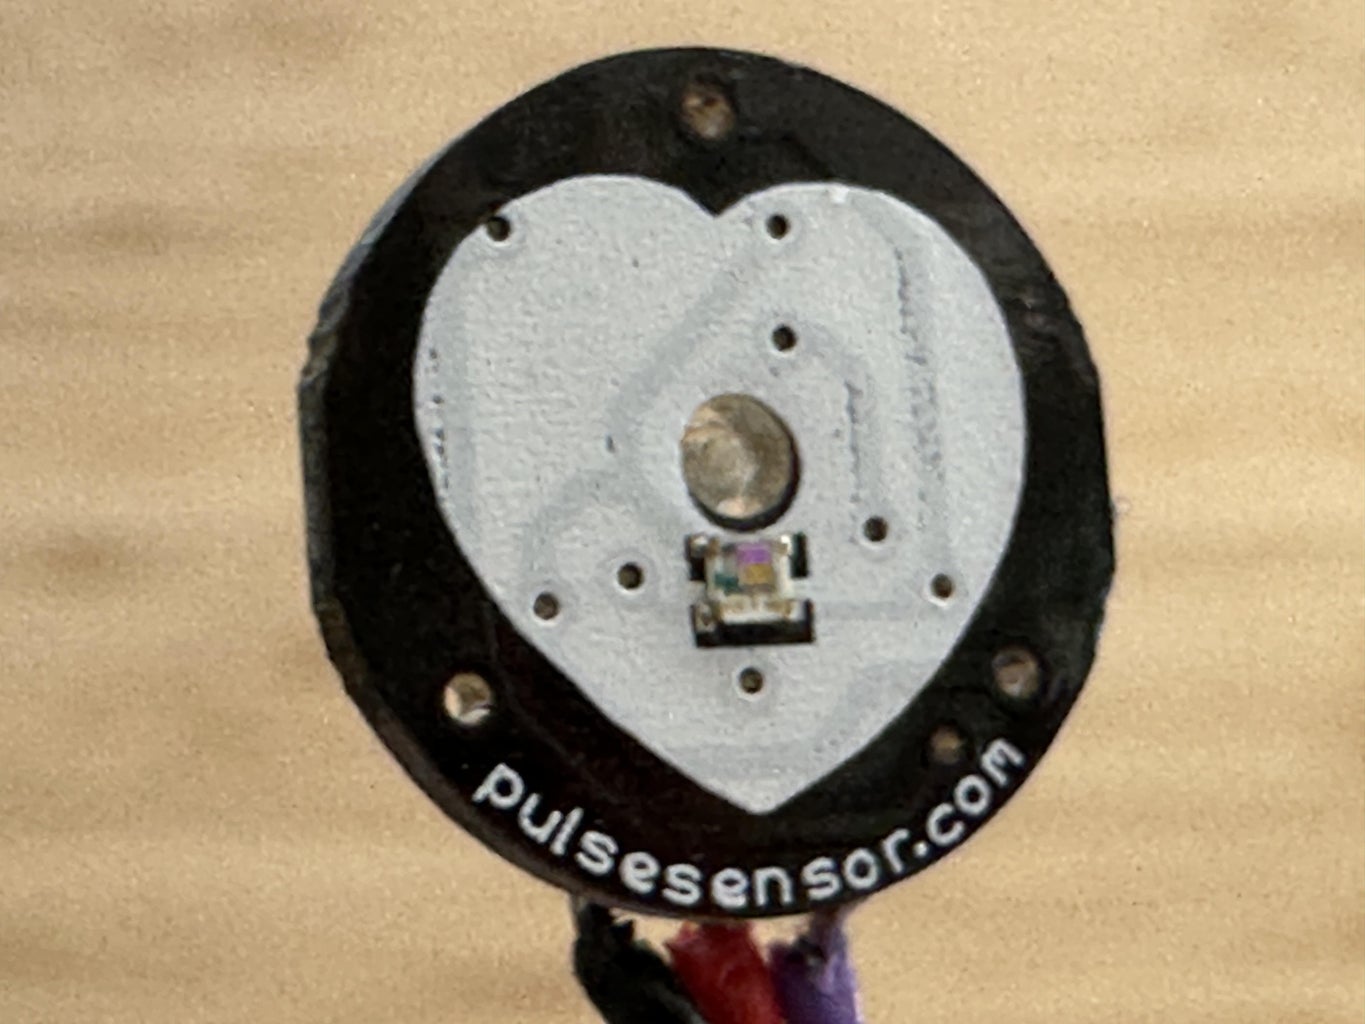 Insulate Surface of PulseSensor